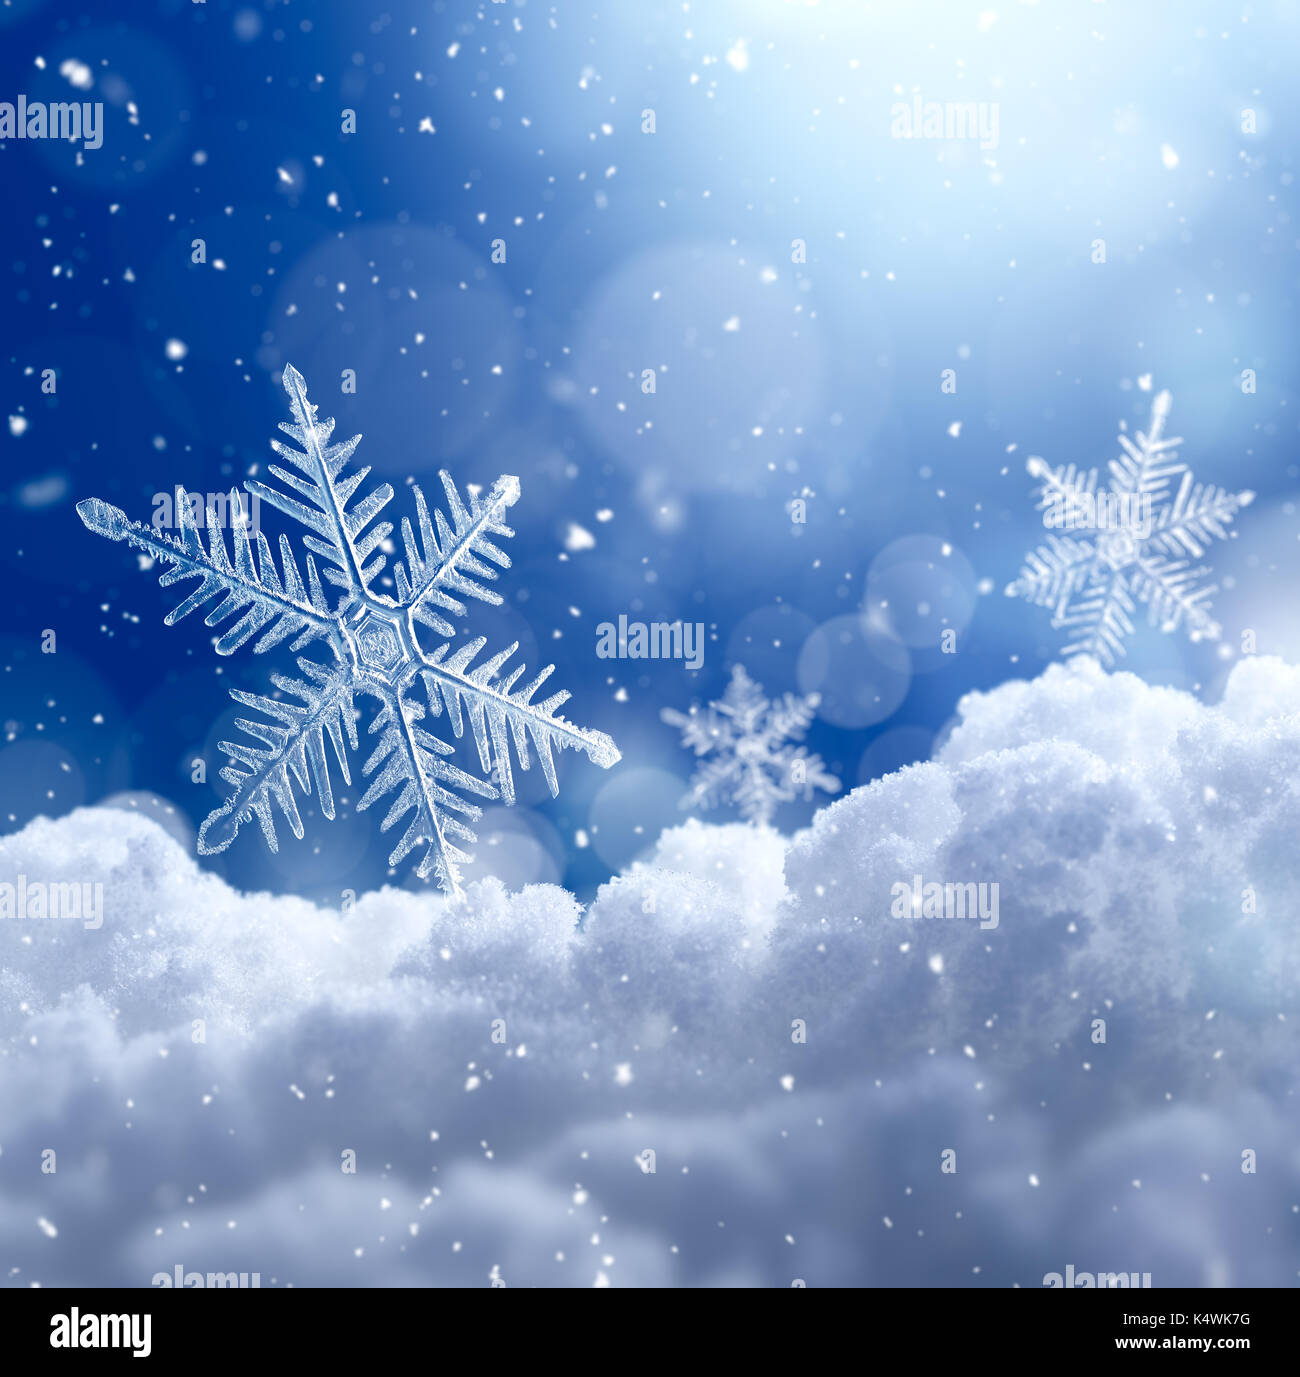 Snowflake on snow with bokeh background Stock Photo